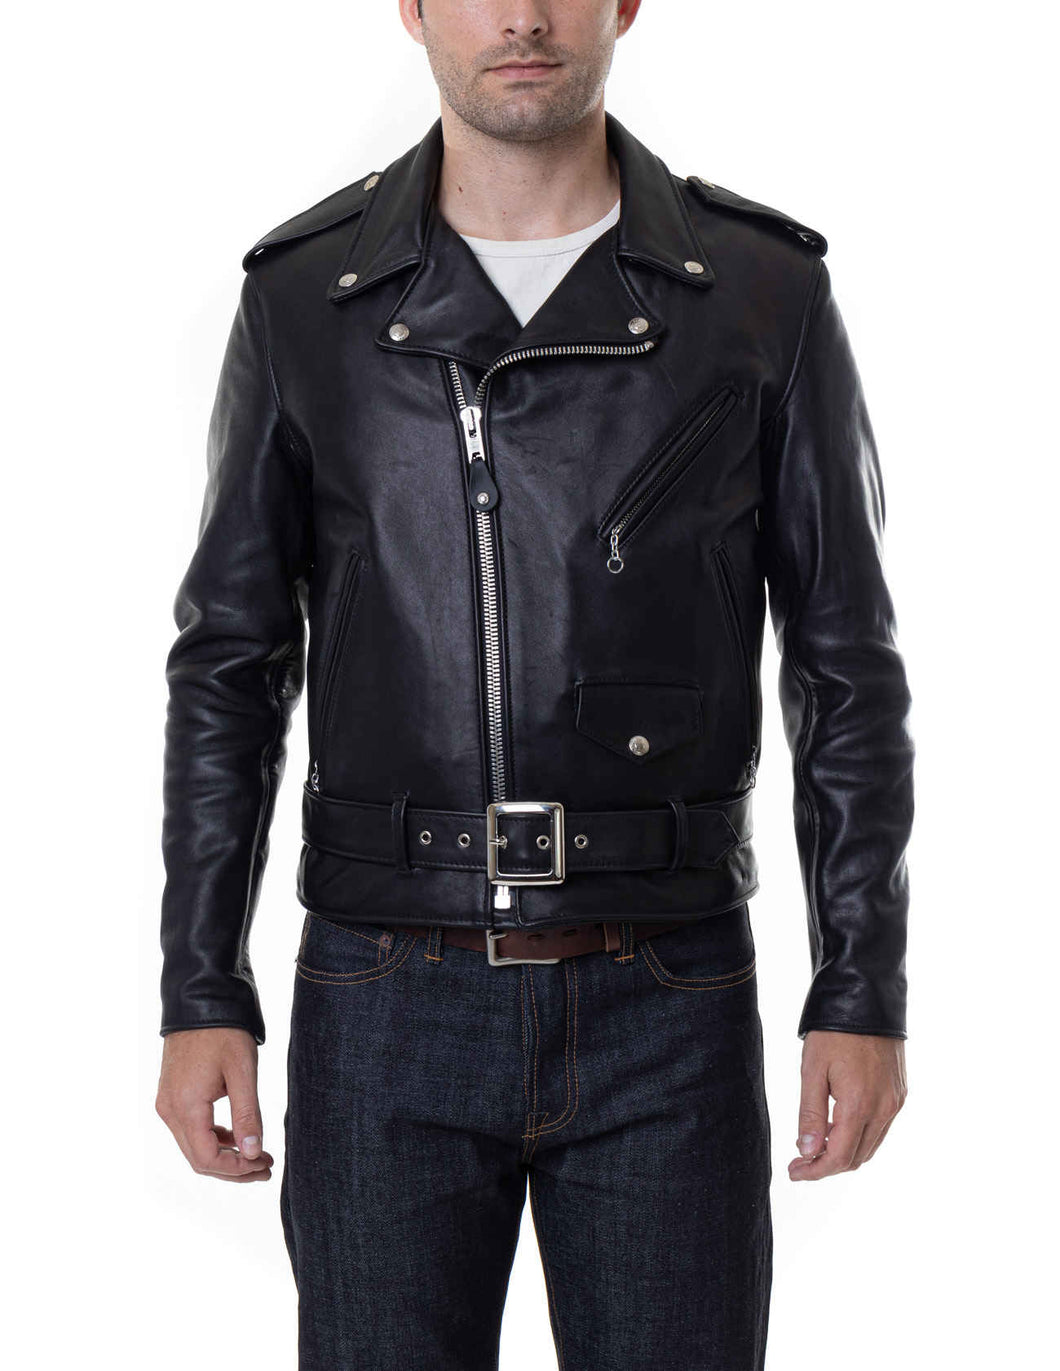 Men’s Black Real Leather Motorcycle Jacket